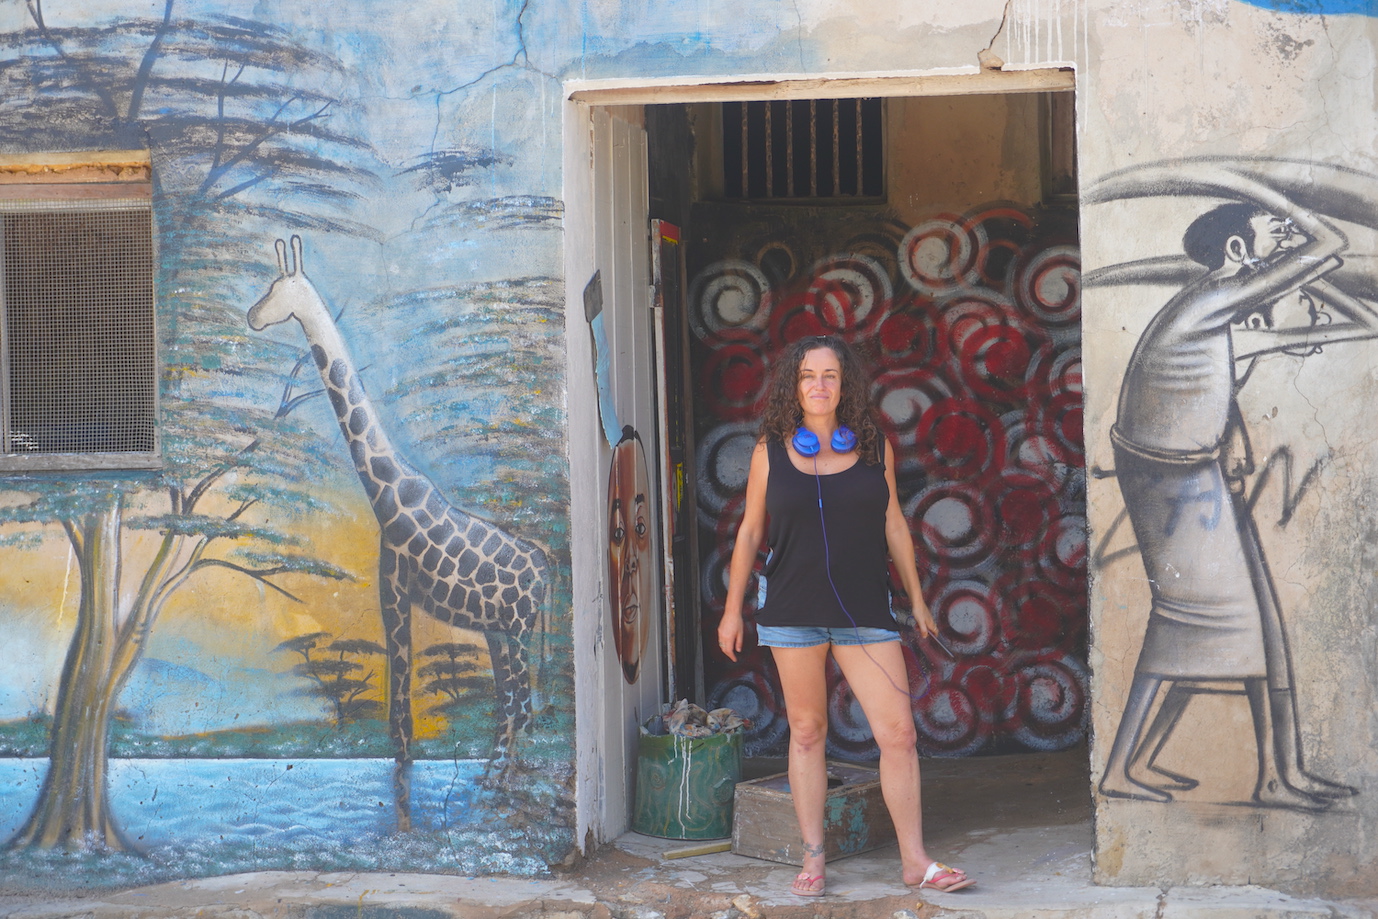 Pilar with some street art at the Kilwa Kivinje